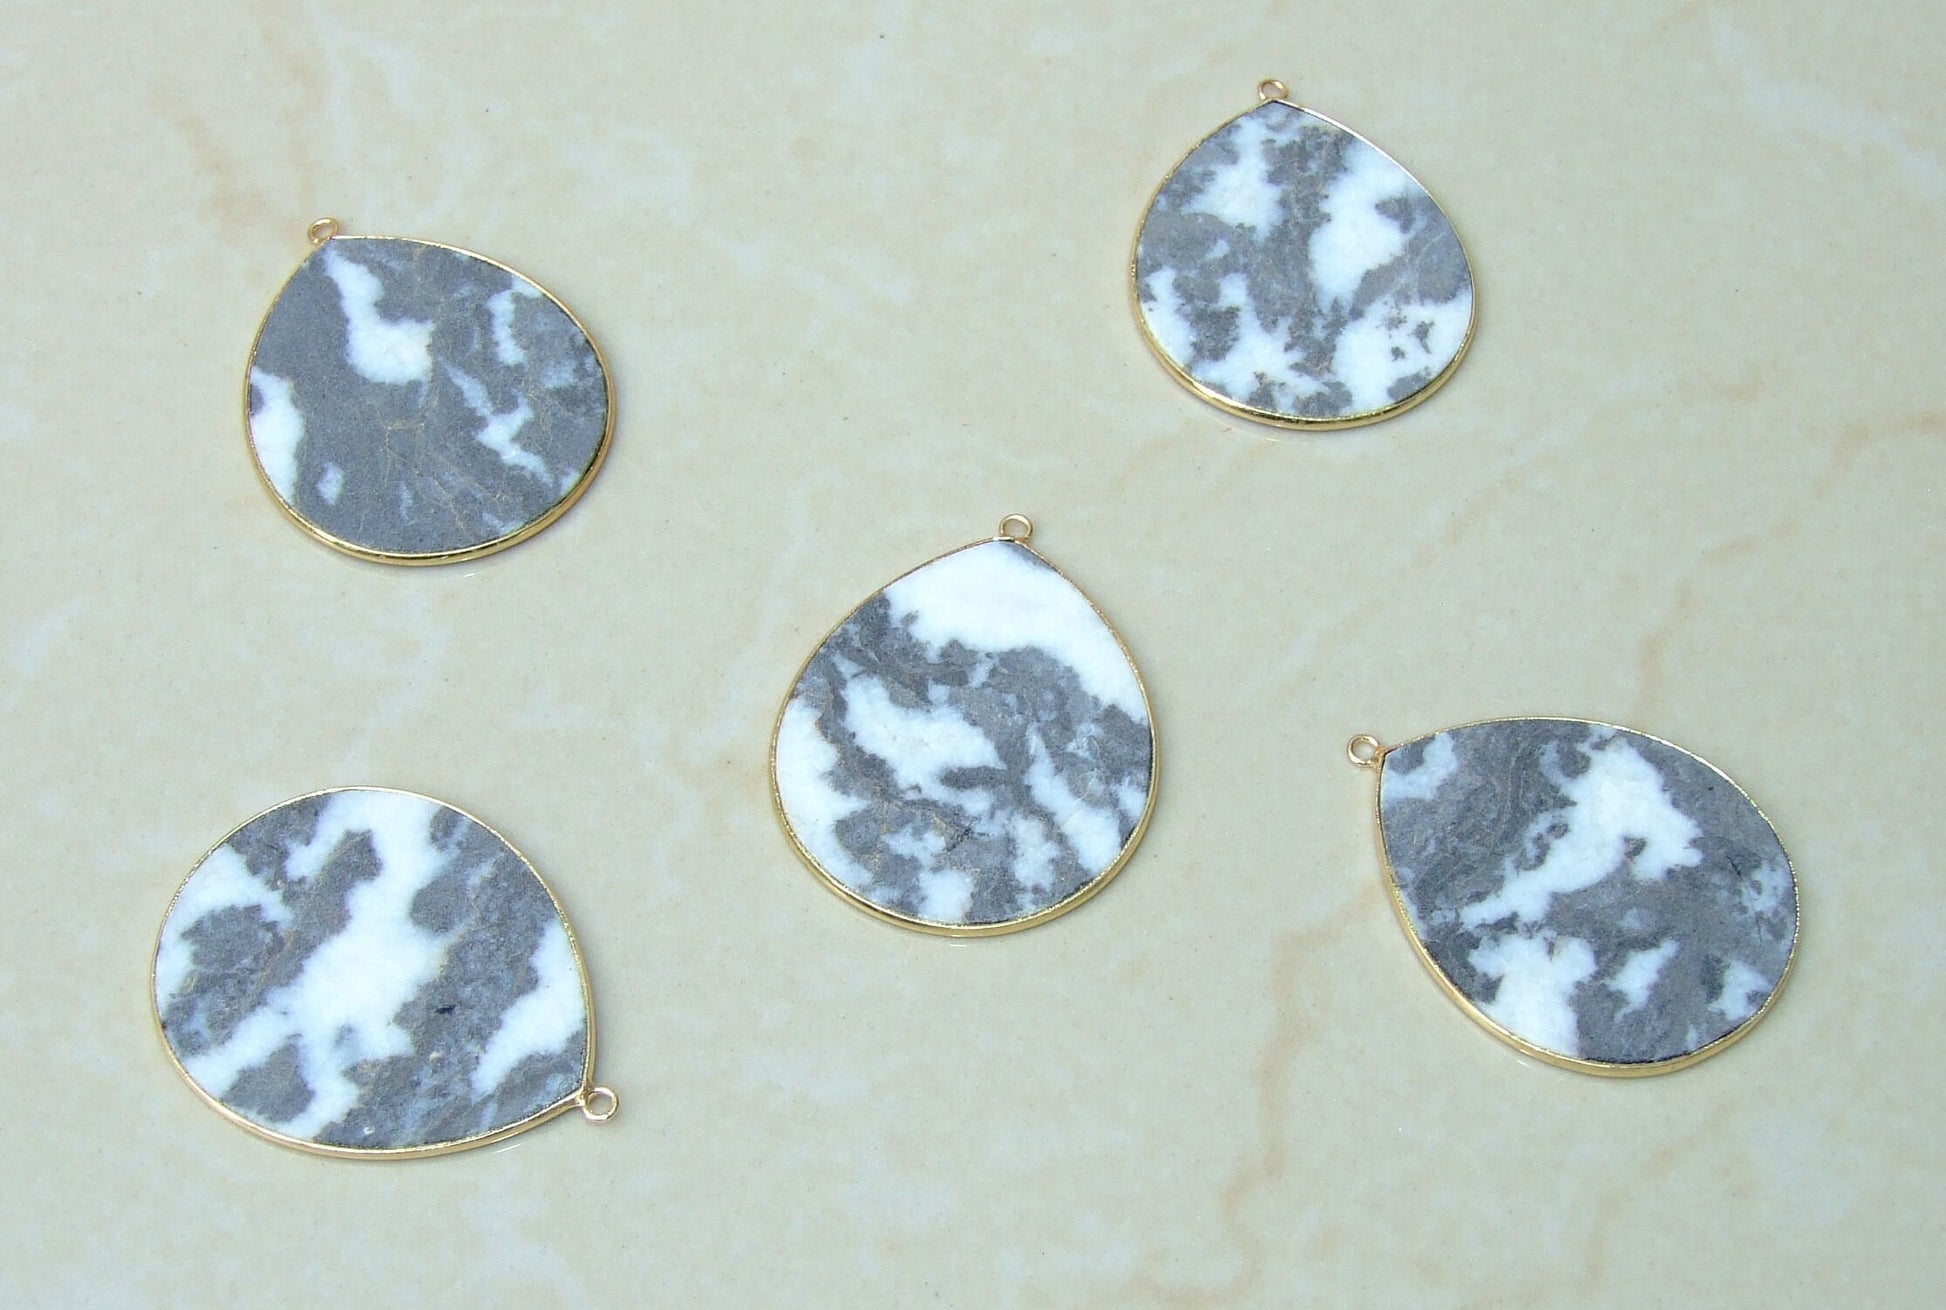 Zebra Jasper Pendant, Gemstone Pendant, Slice Pendant, Gold Plated Bezel and Bail, Tear Drop Pendant, Thin, Polished - 32mm x 38mm